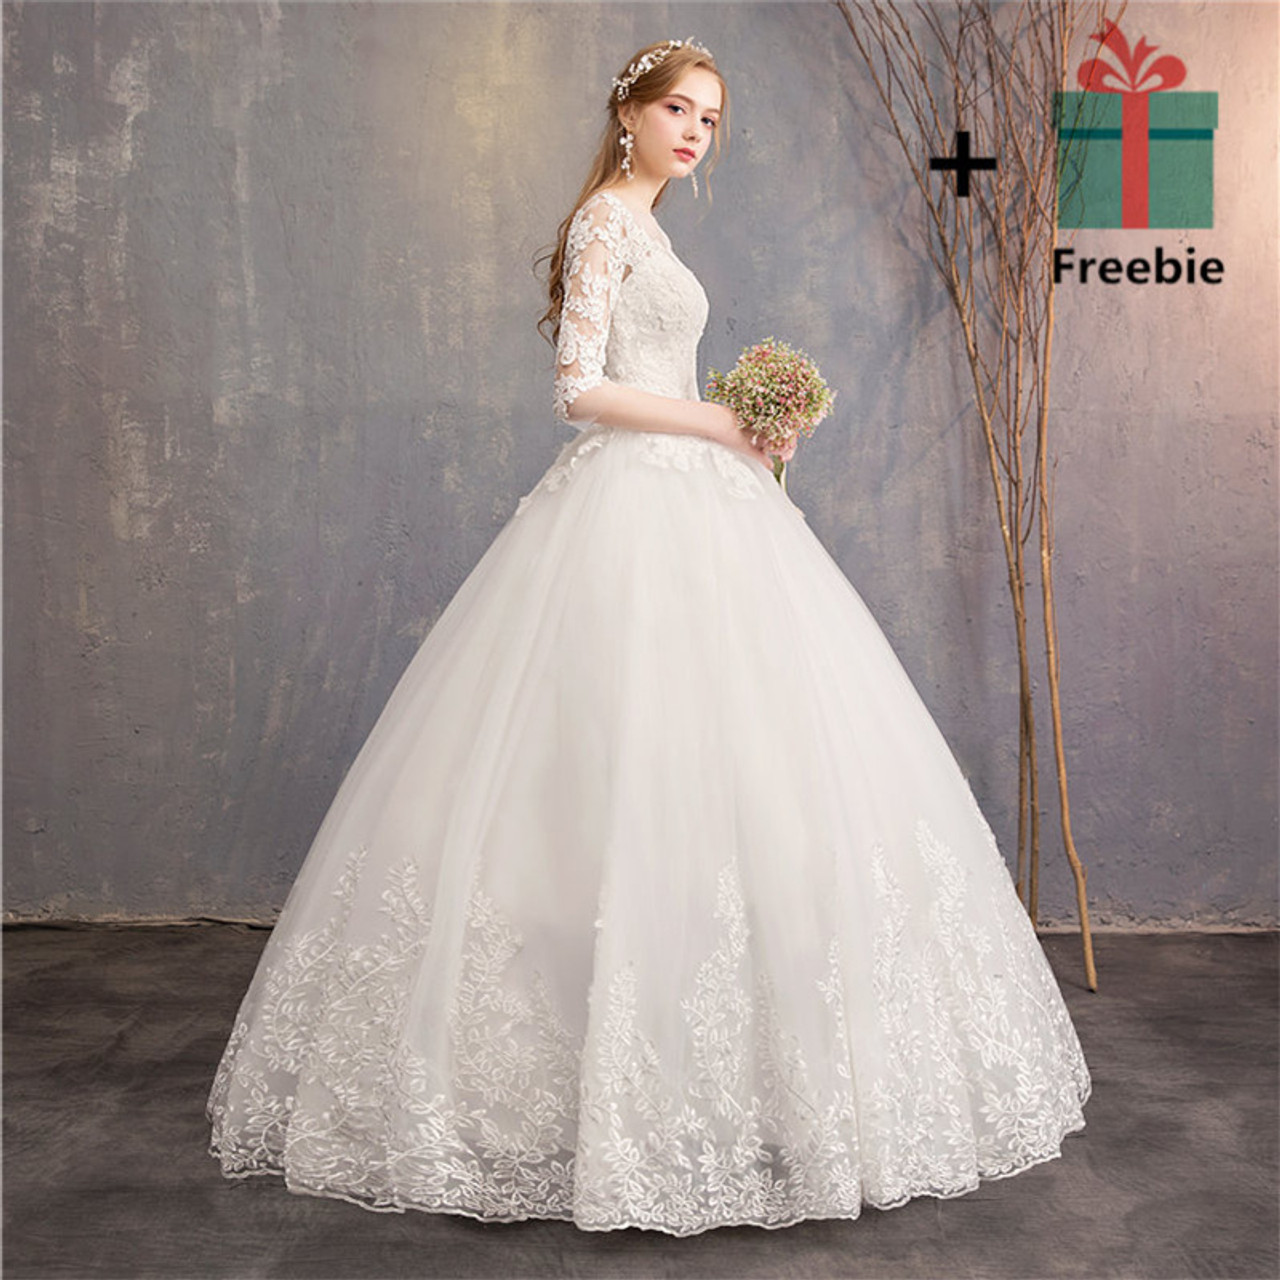 25 Fashionable Wedding Dress Ideas for Women in 2019 | Fashionsfield | Ball gowns  wedding, Princess wedding dresses, Wedding dresses